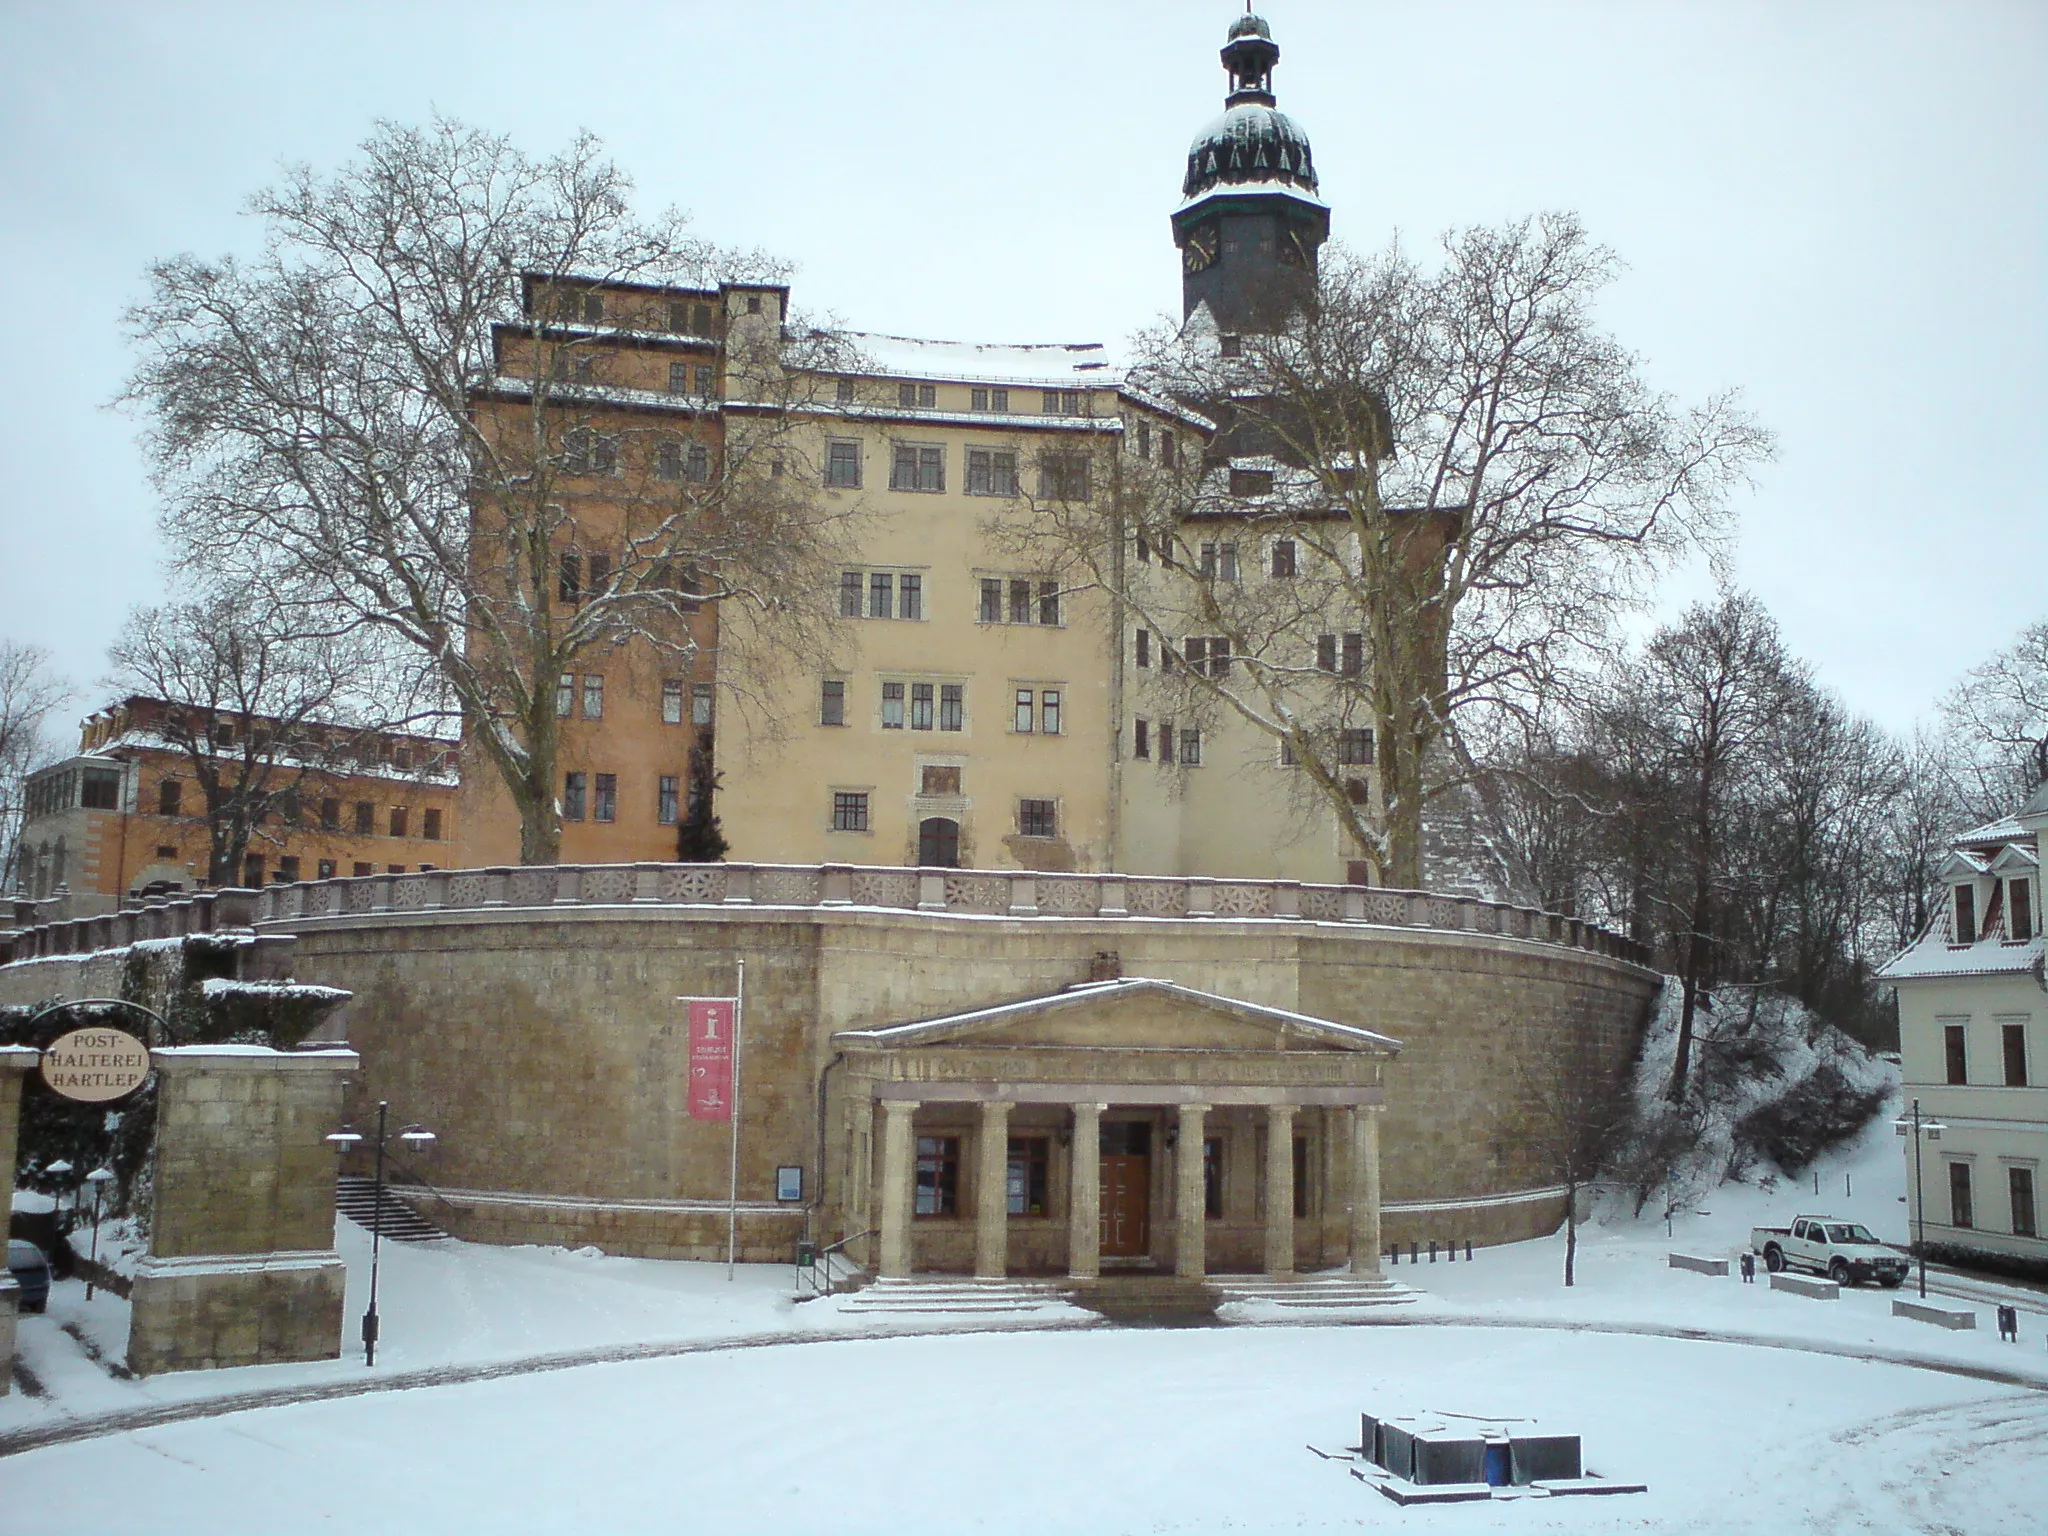 Photo showing: Sondershausen Palace and marketplace